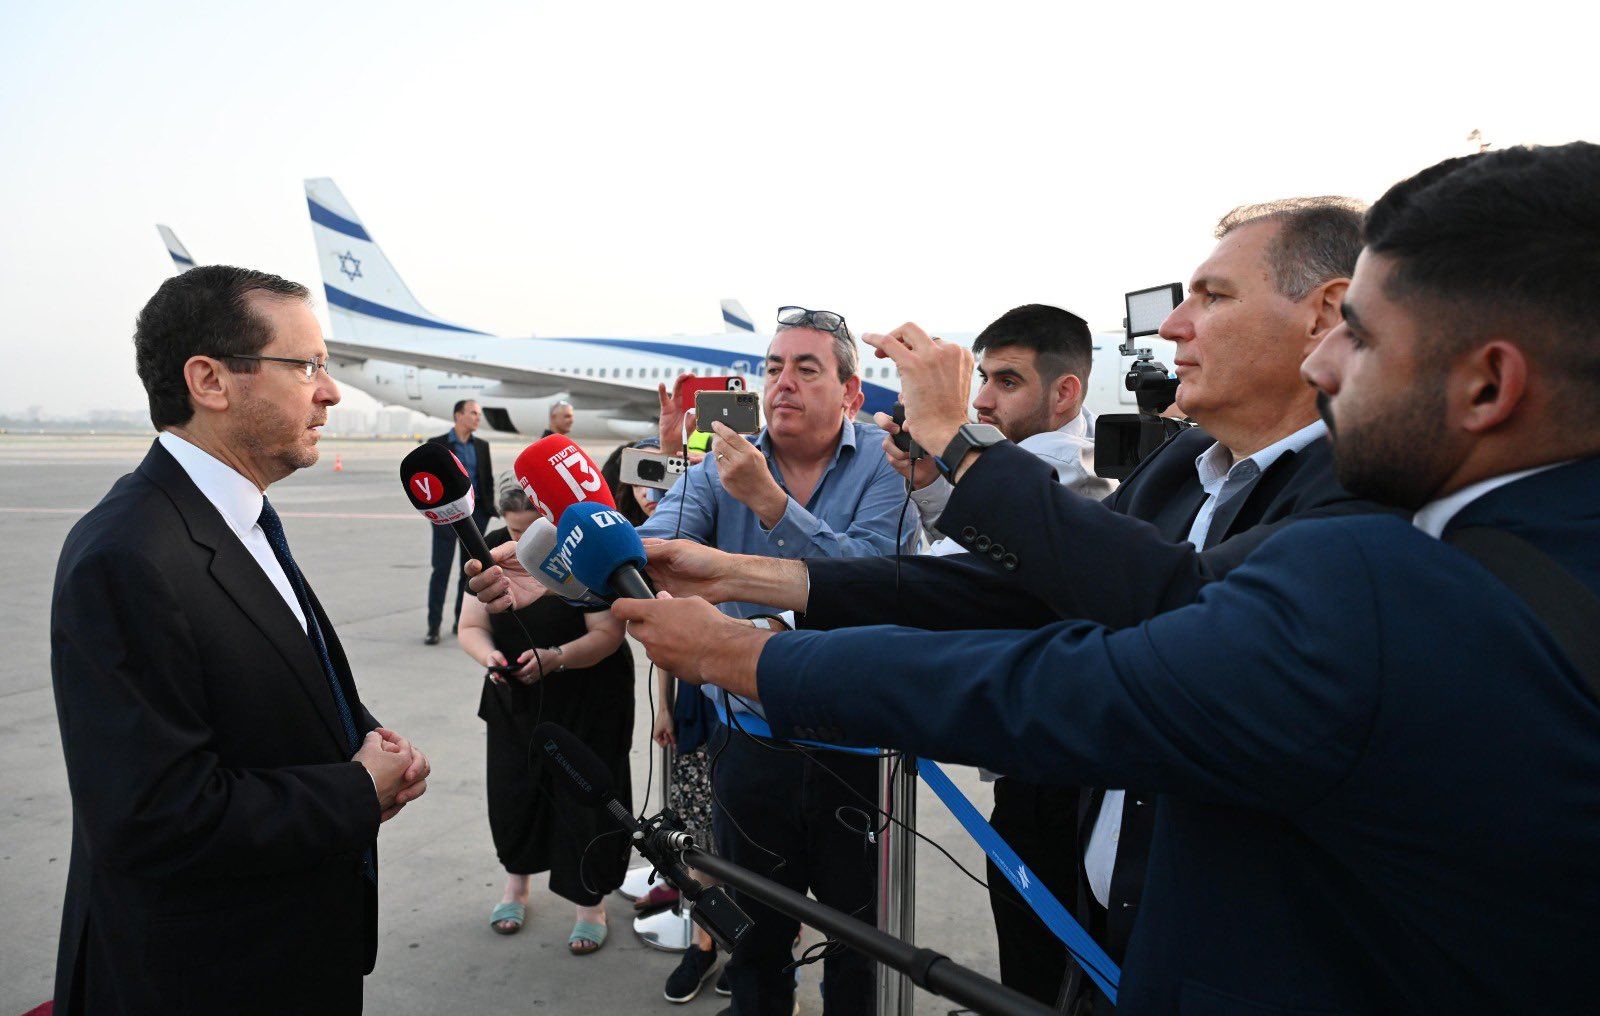 Israeli President embarks on visit to Azerbaijan